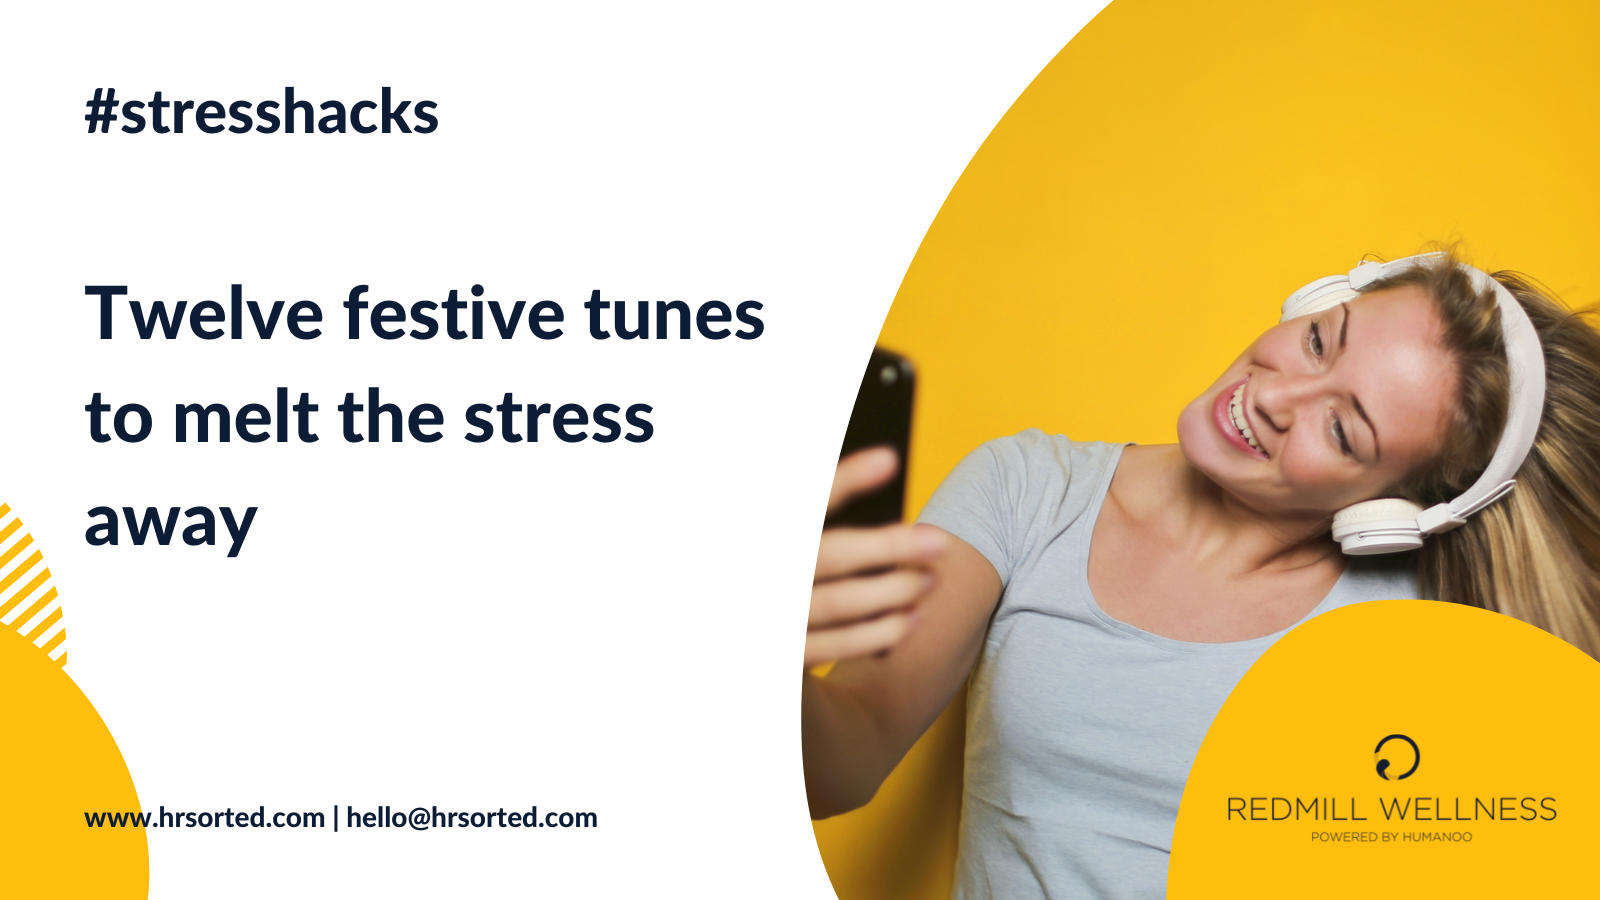 Twelve festive tunes to melt the stress away